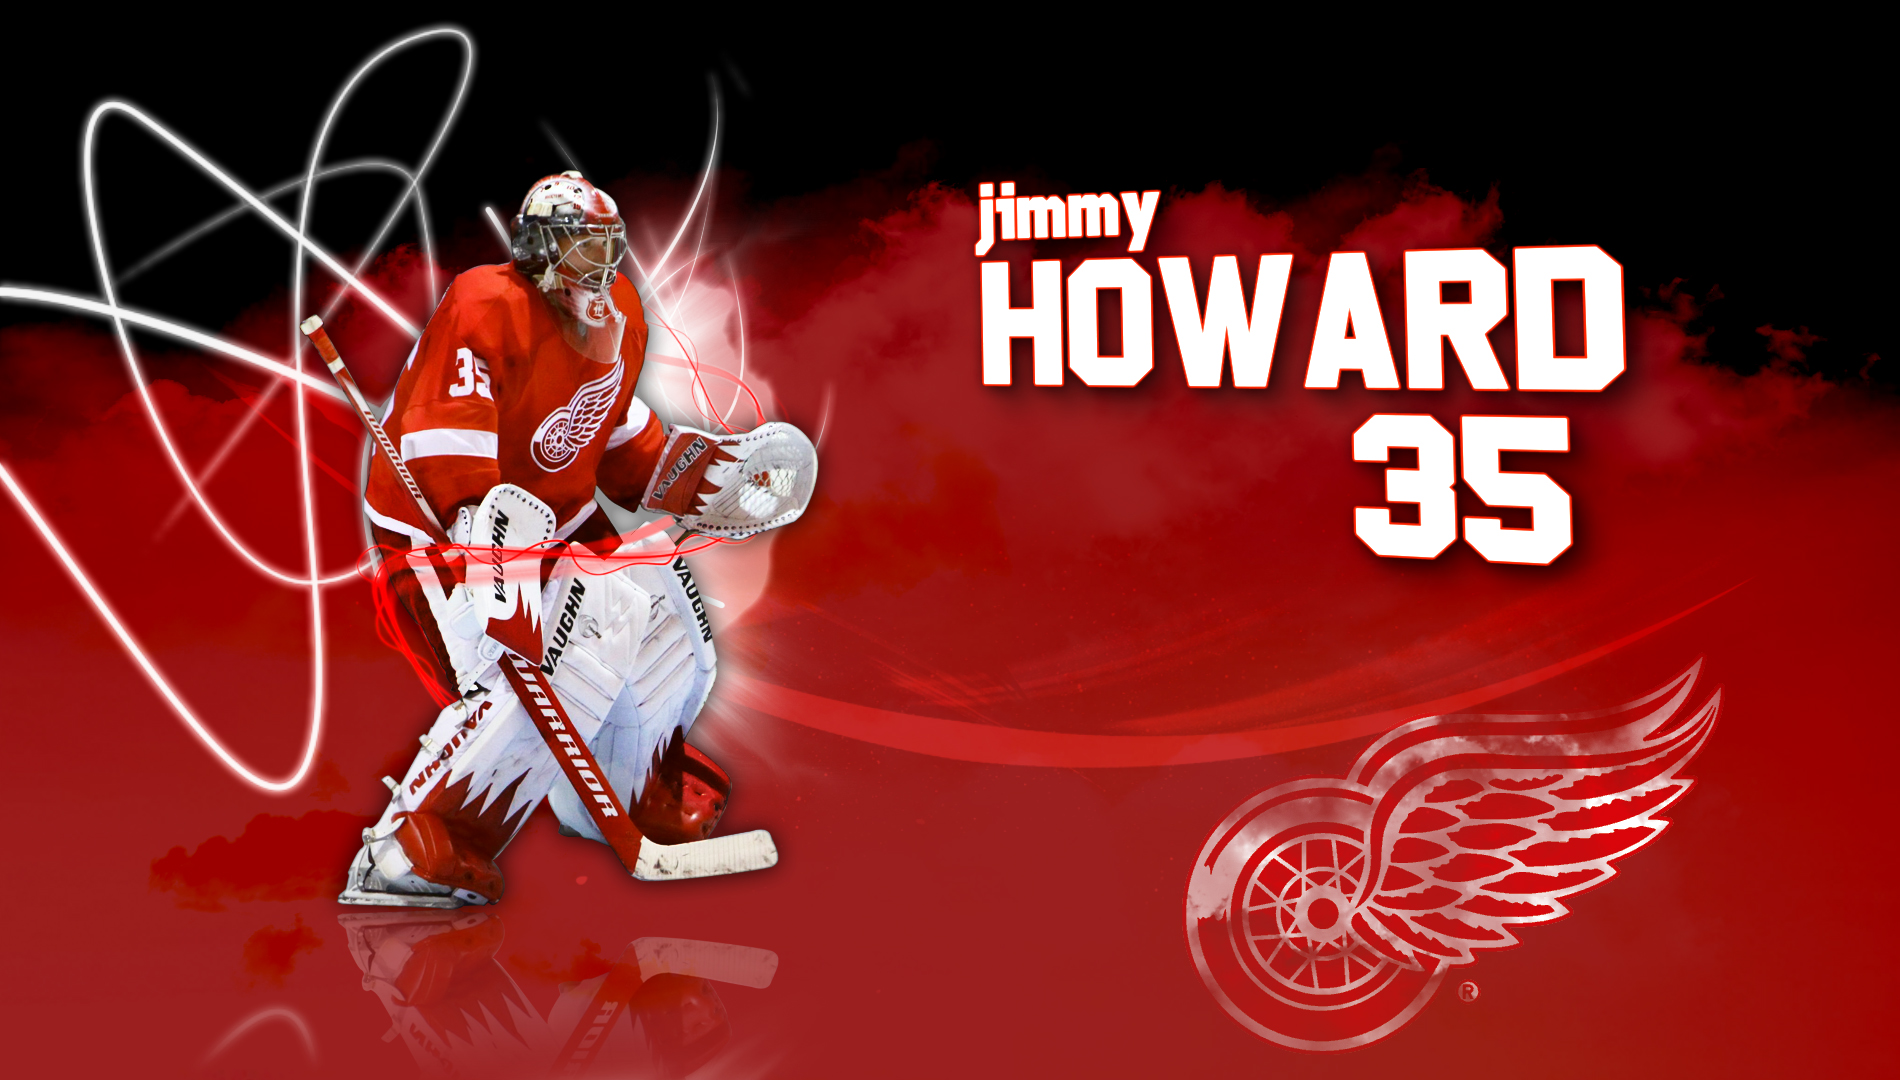 Hockey Jimmy Howard Detroit Red Wings Wallpaper Background